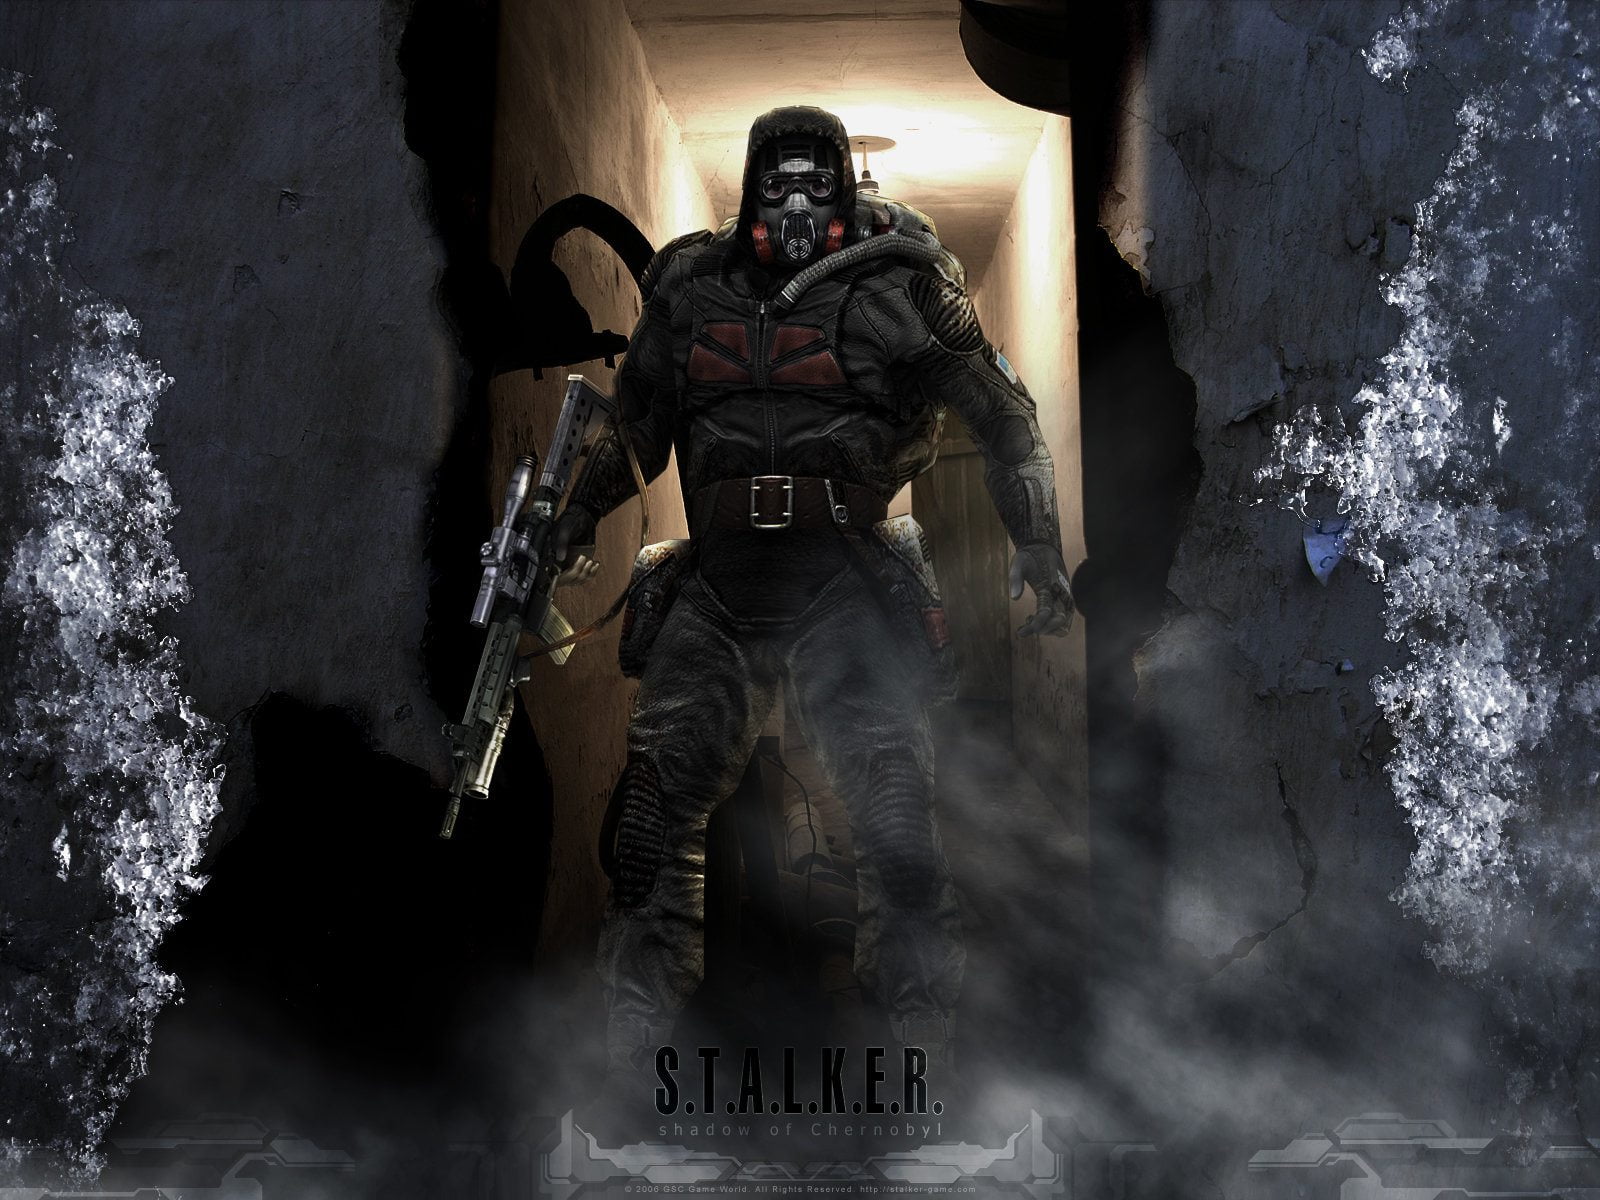 Stalker game digital wallpaper, protection, machine, gas mask